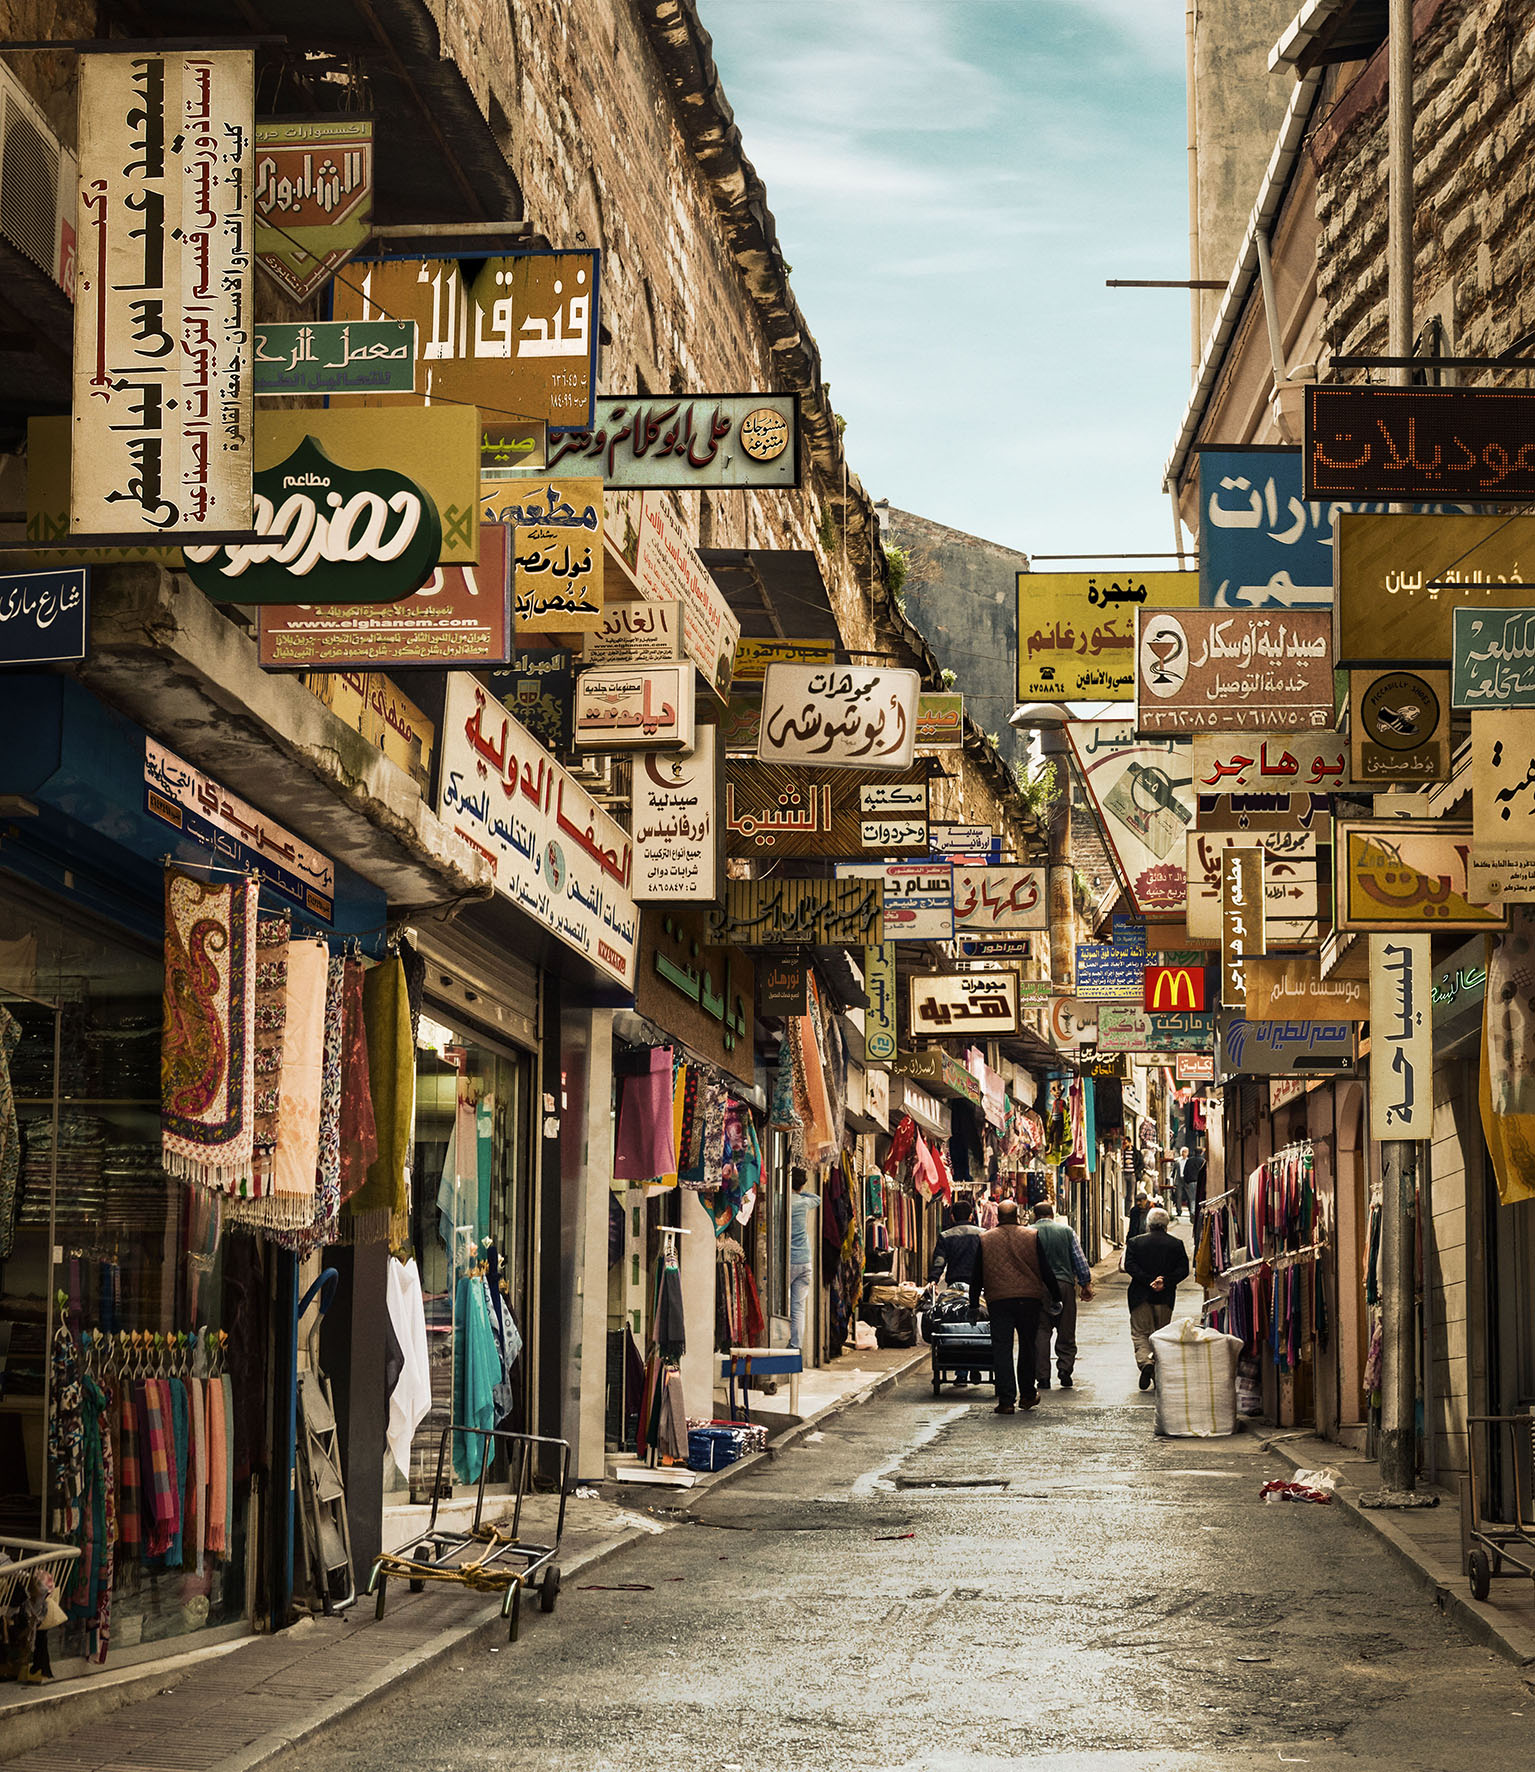 DYBRGW Shops on a street near the University and Grand Bazaar, Istanbul,Turkey